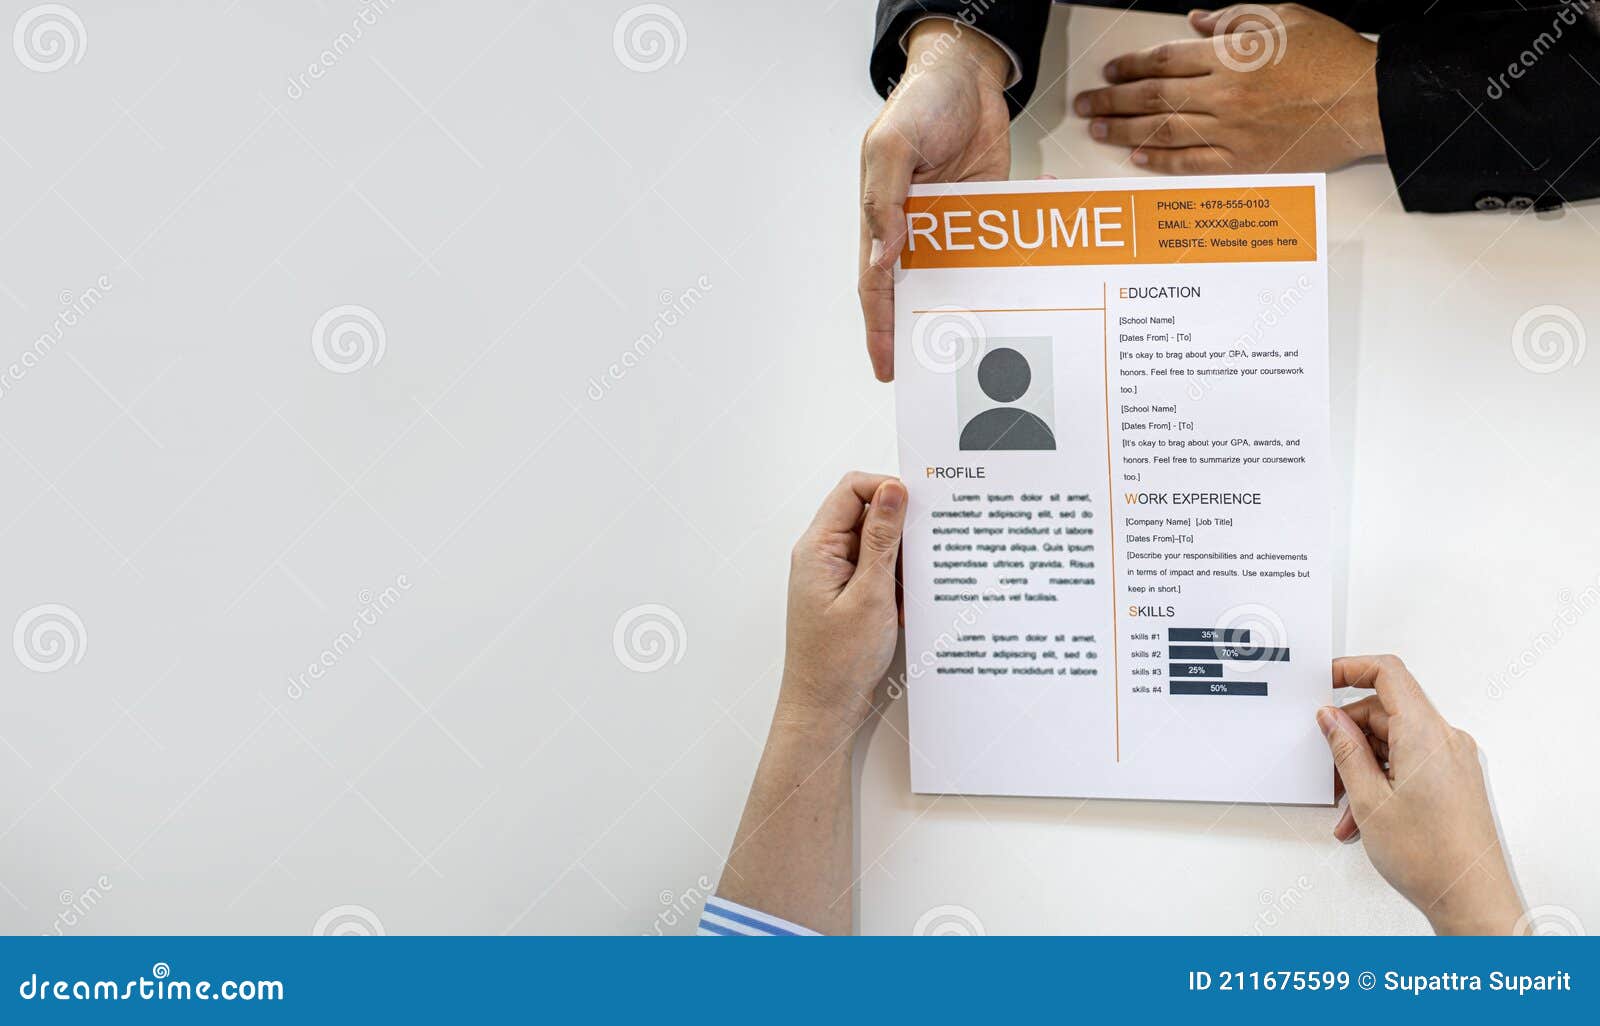 Talent Acquisition Lead / Internal Recruiter - Healthcare (entry level) Job TotalCare Walk-In Clinic Chino, CA 91710